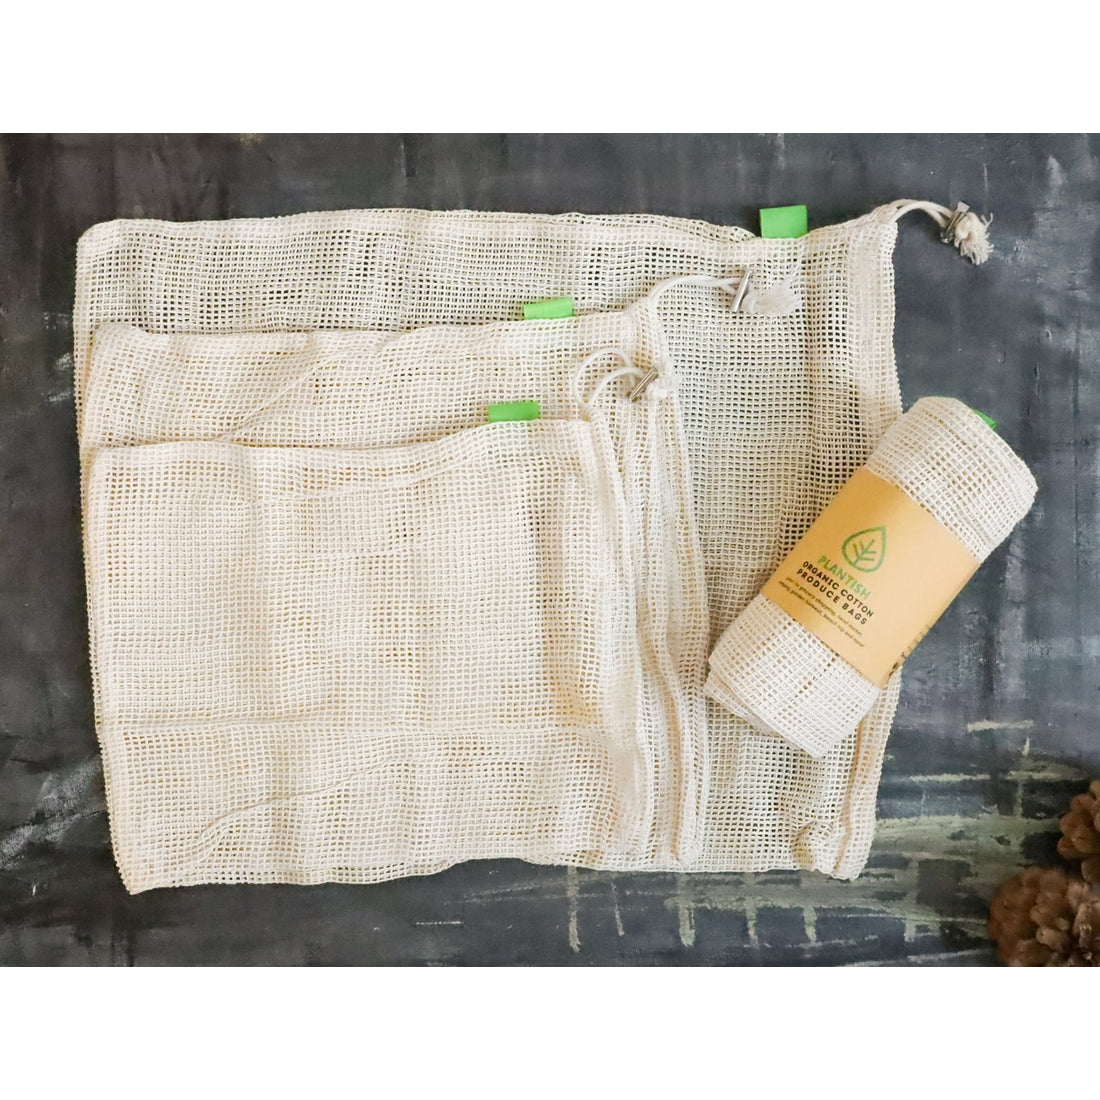 Organic Cotton Produce Bags - Set of 3